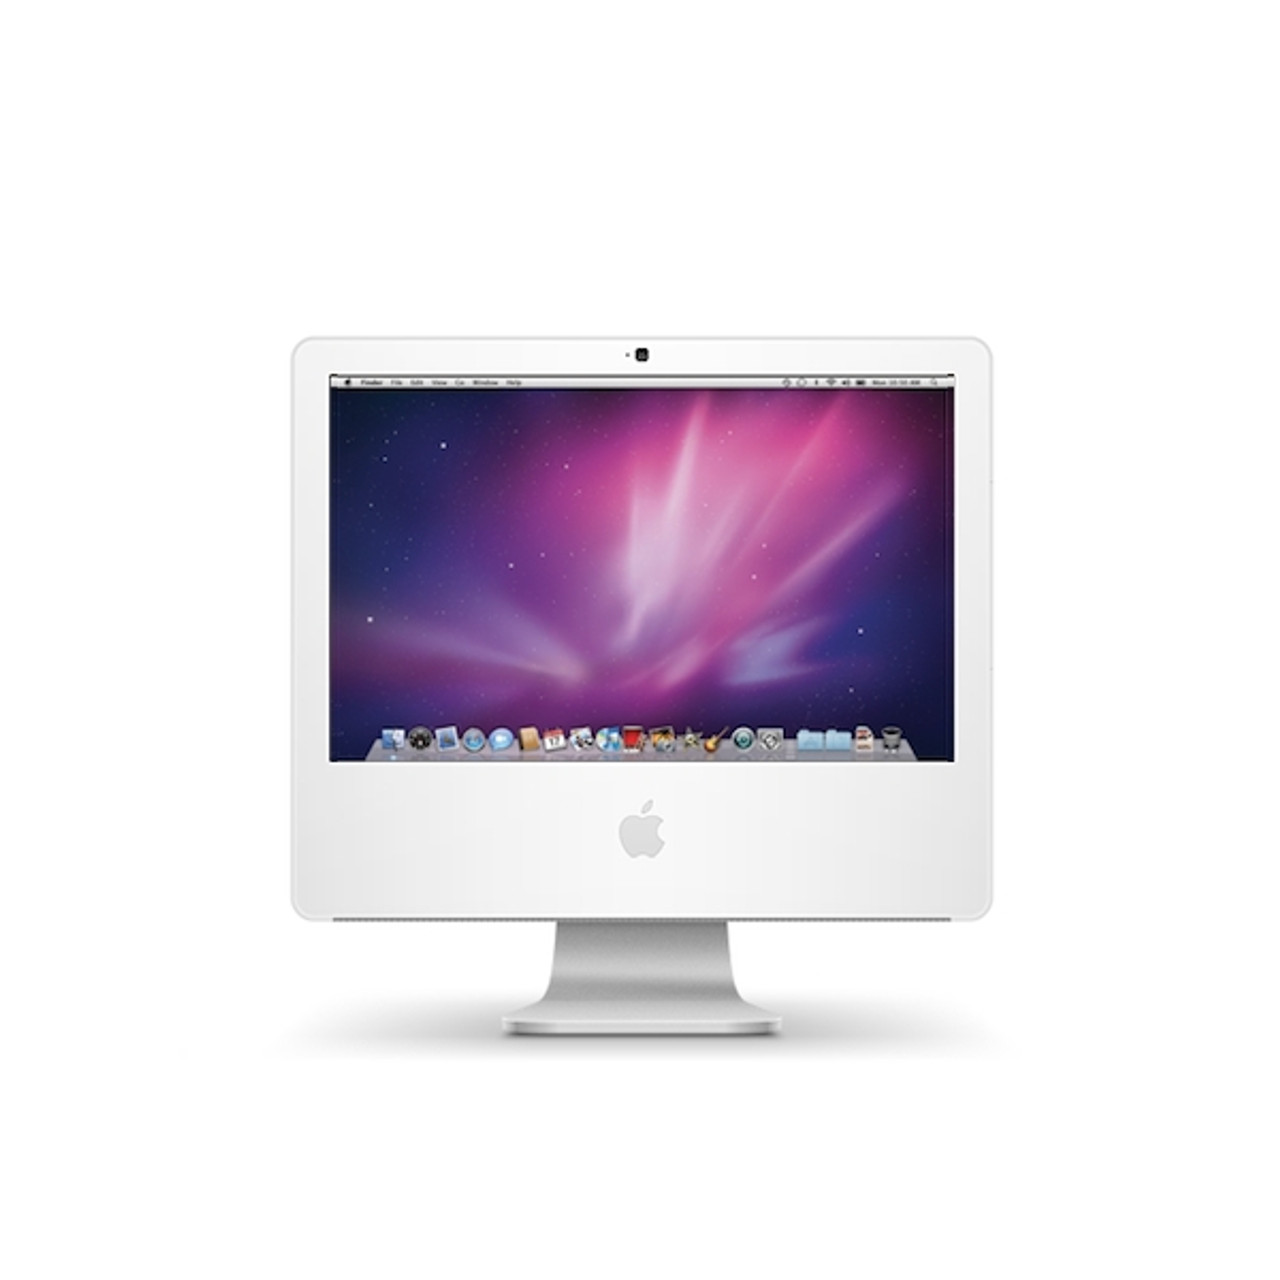 Apple iMac 17-inch, Late 2006 - 2.0GHz Core 2 Duo  AIO